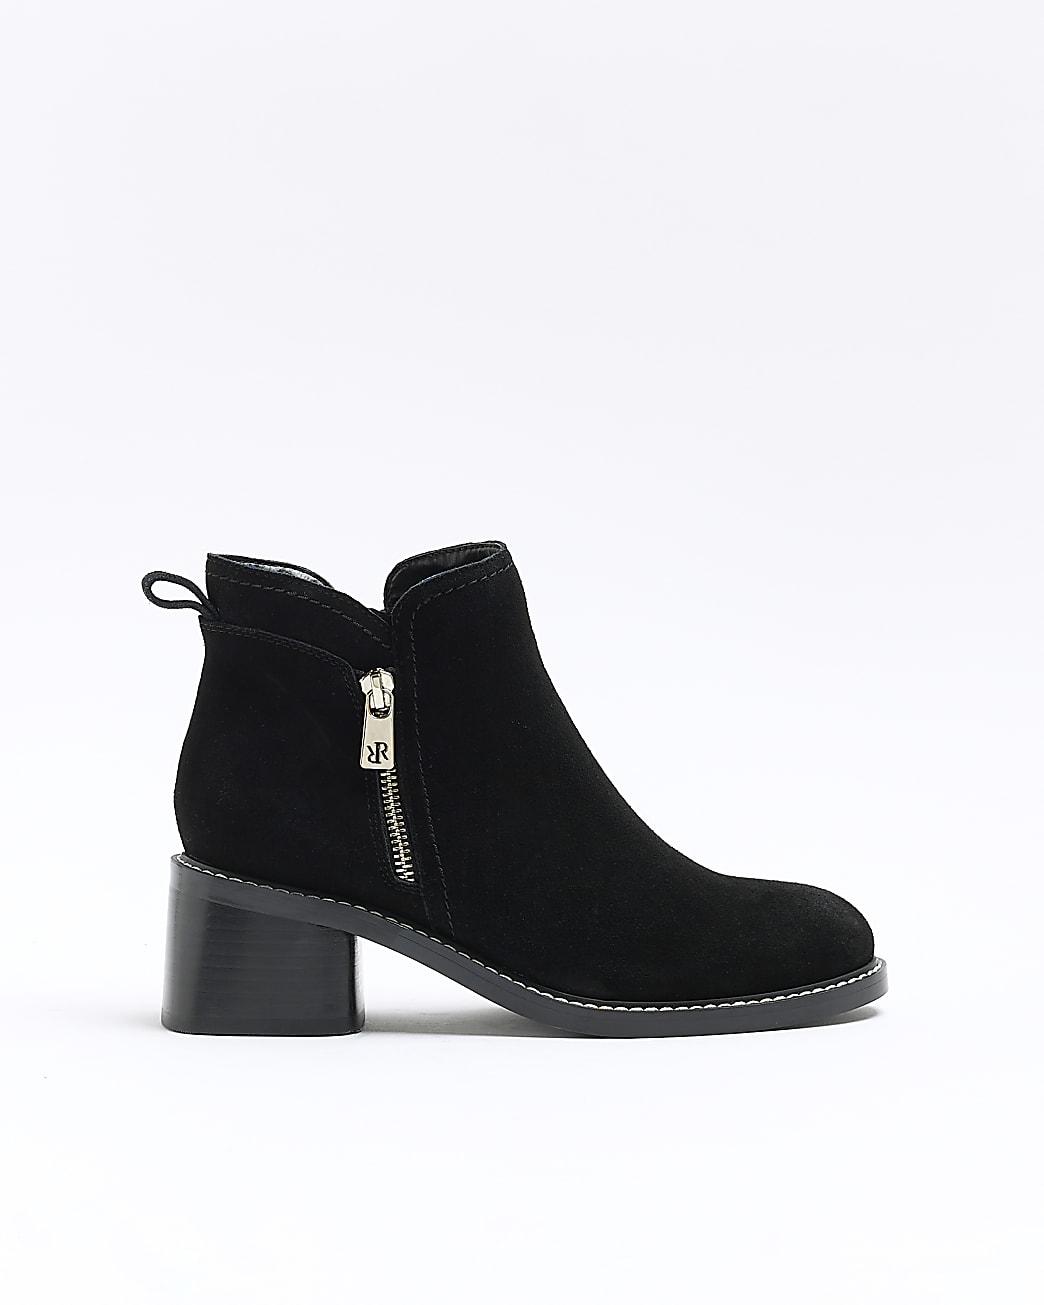 Hotter Black Suede Heeled Ankle Boots Double Side Zip Women's UK 5.5 EU  38.5 STD | eBay